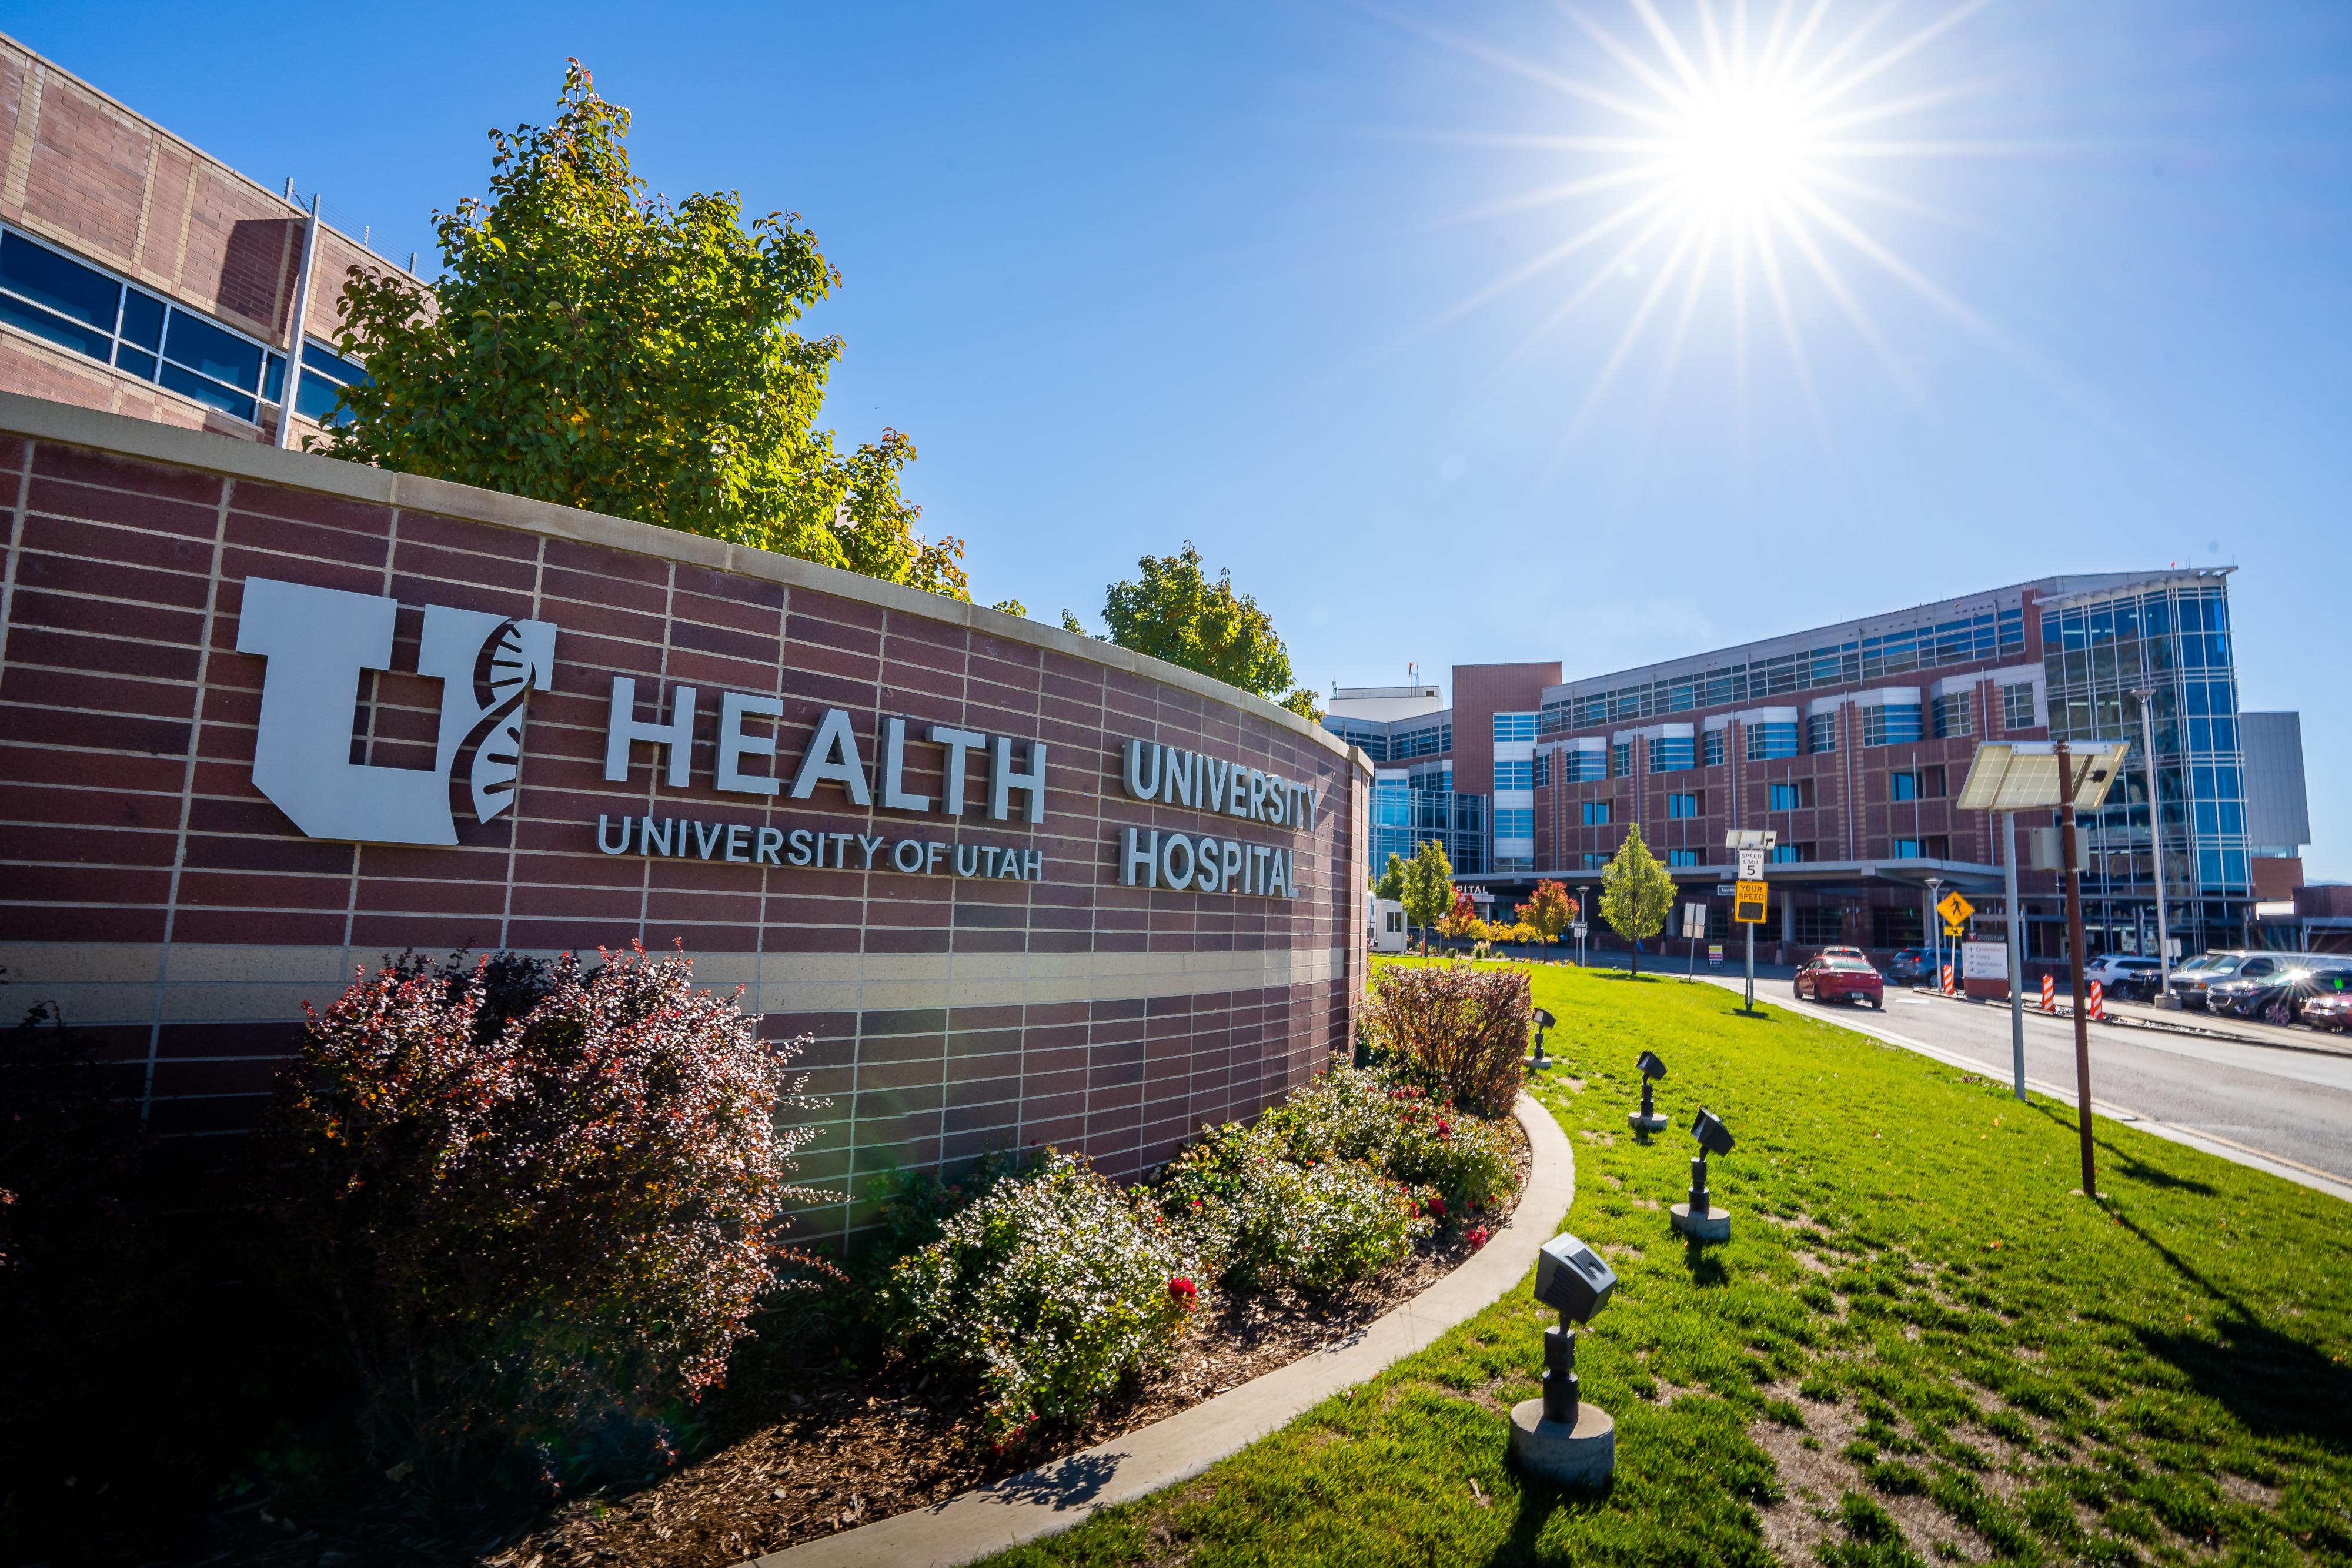 the entrance sign to the University of Utah Health University Hospital